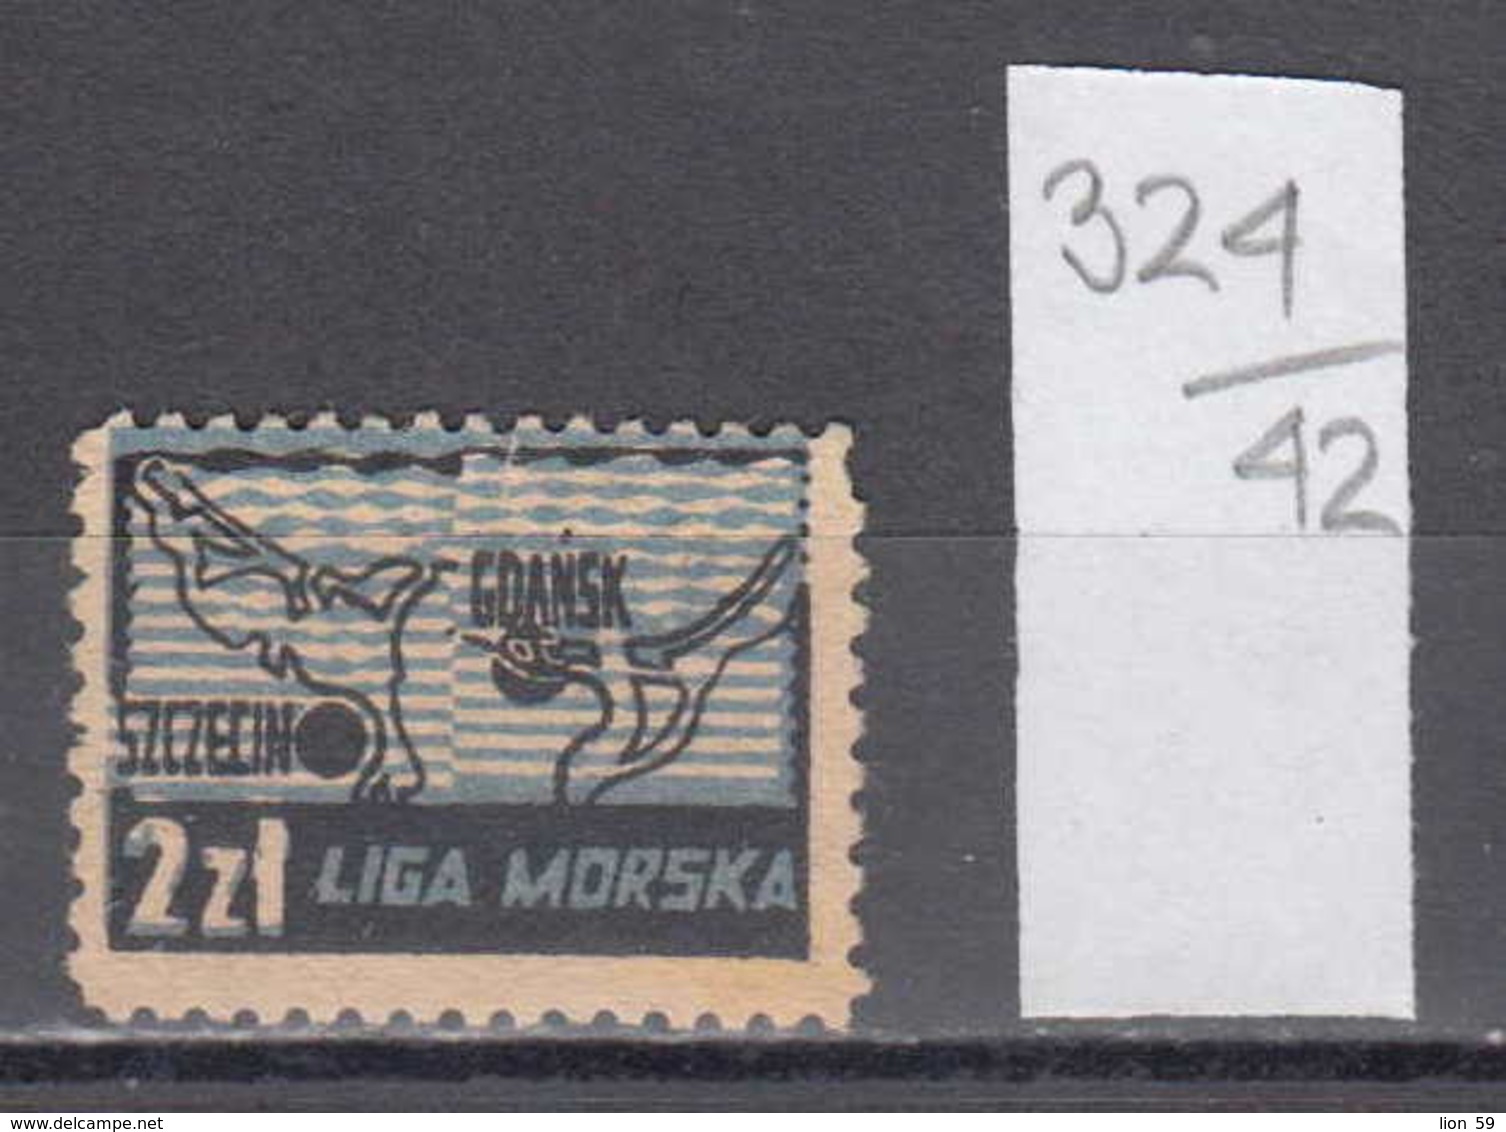 42K324 / 2 Zl. - LIGA MORSKA / Sea League /  SZCZECIN - GDANSK , Revenue Fiscaux Steuermarken Fiscal , Poland Pologne - Fiscaux